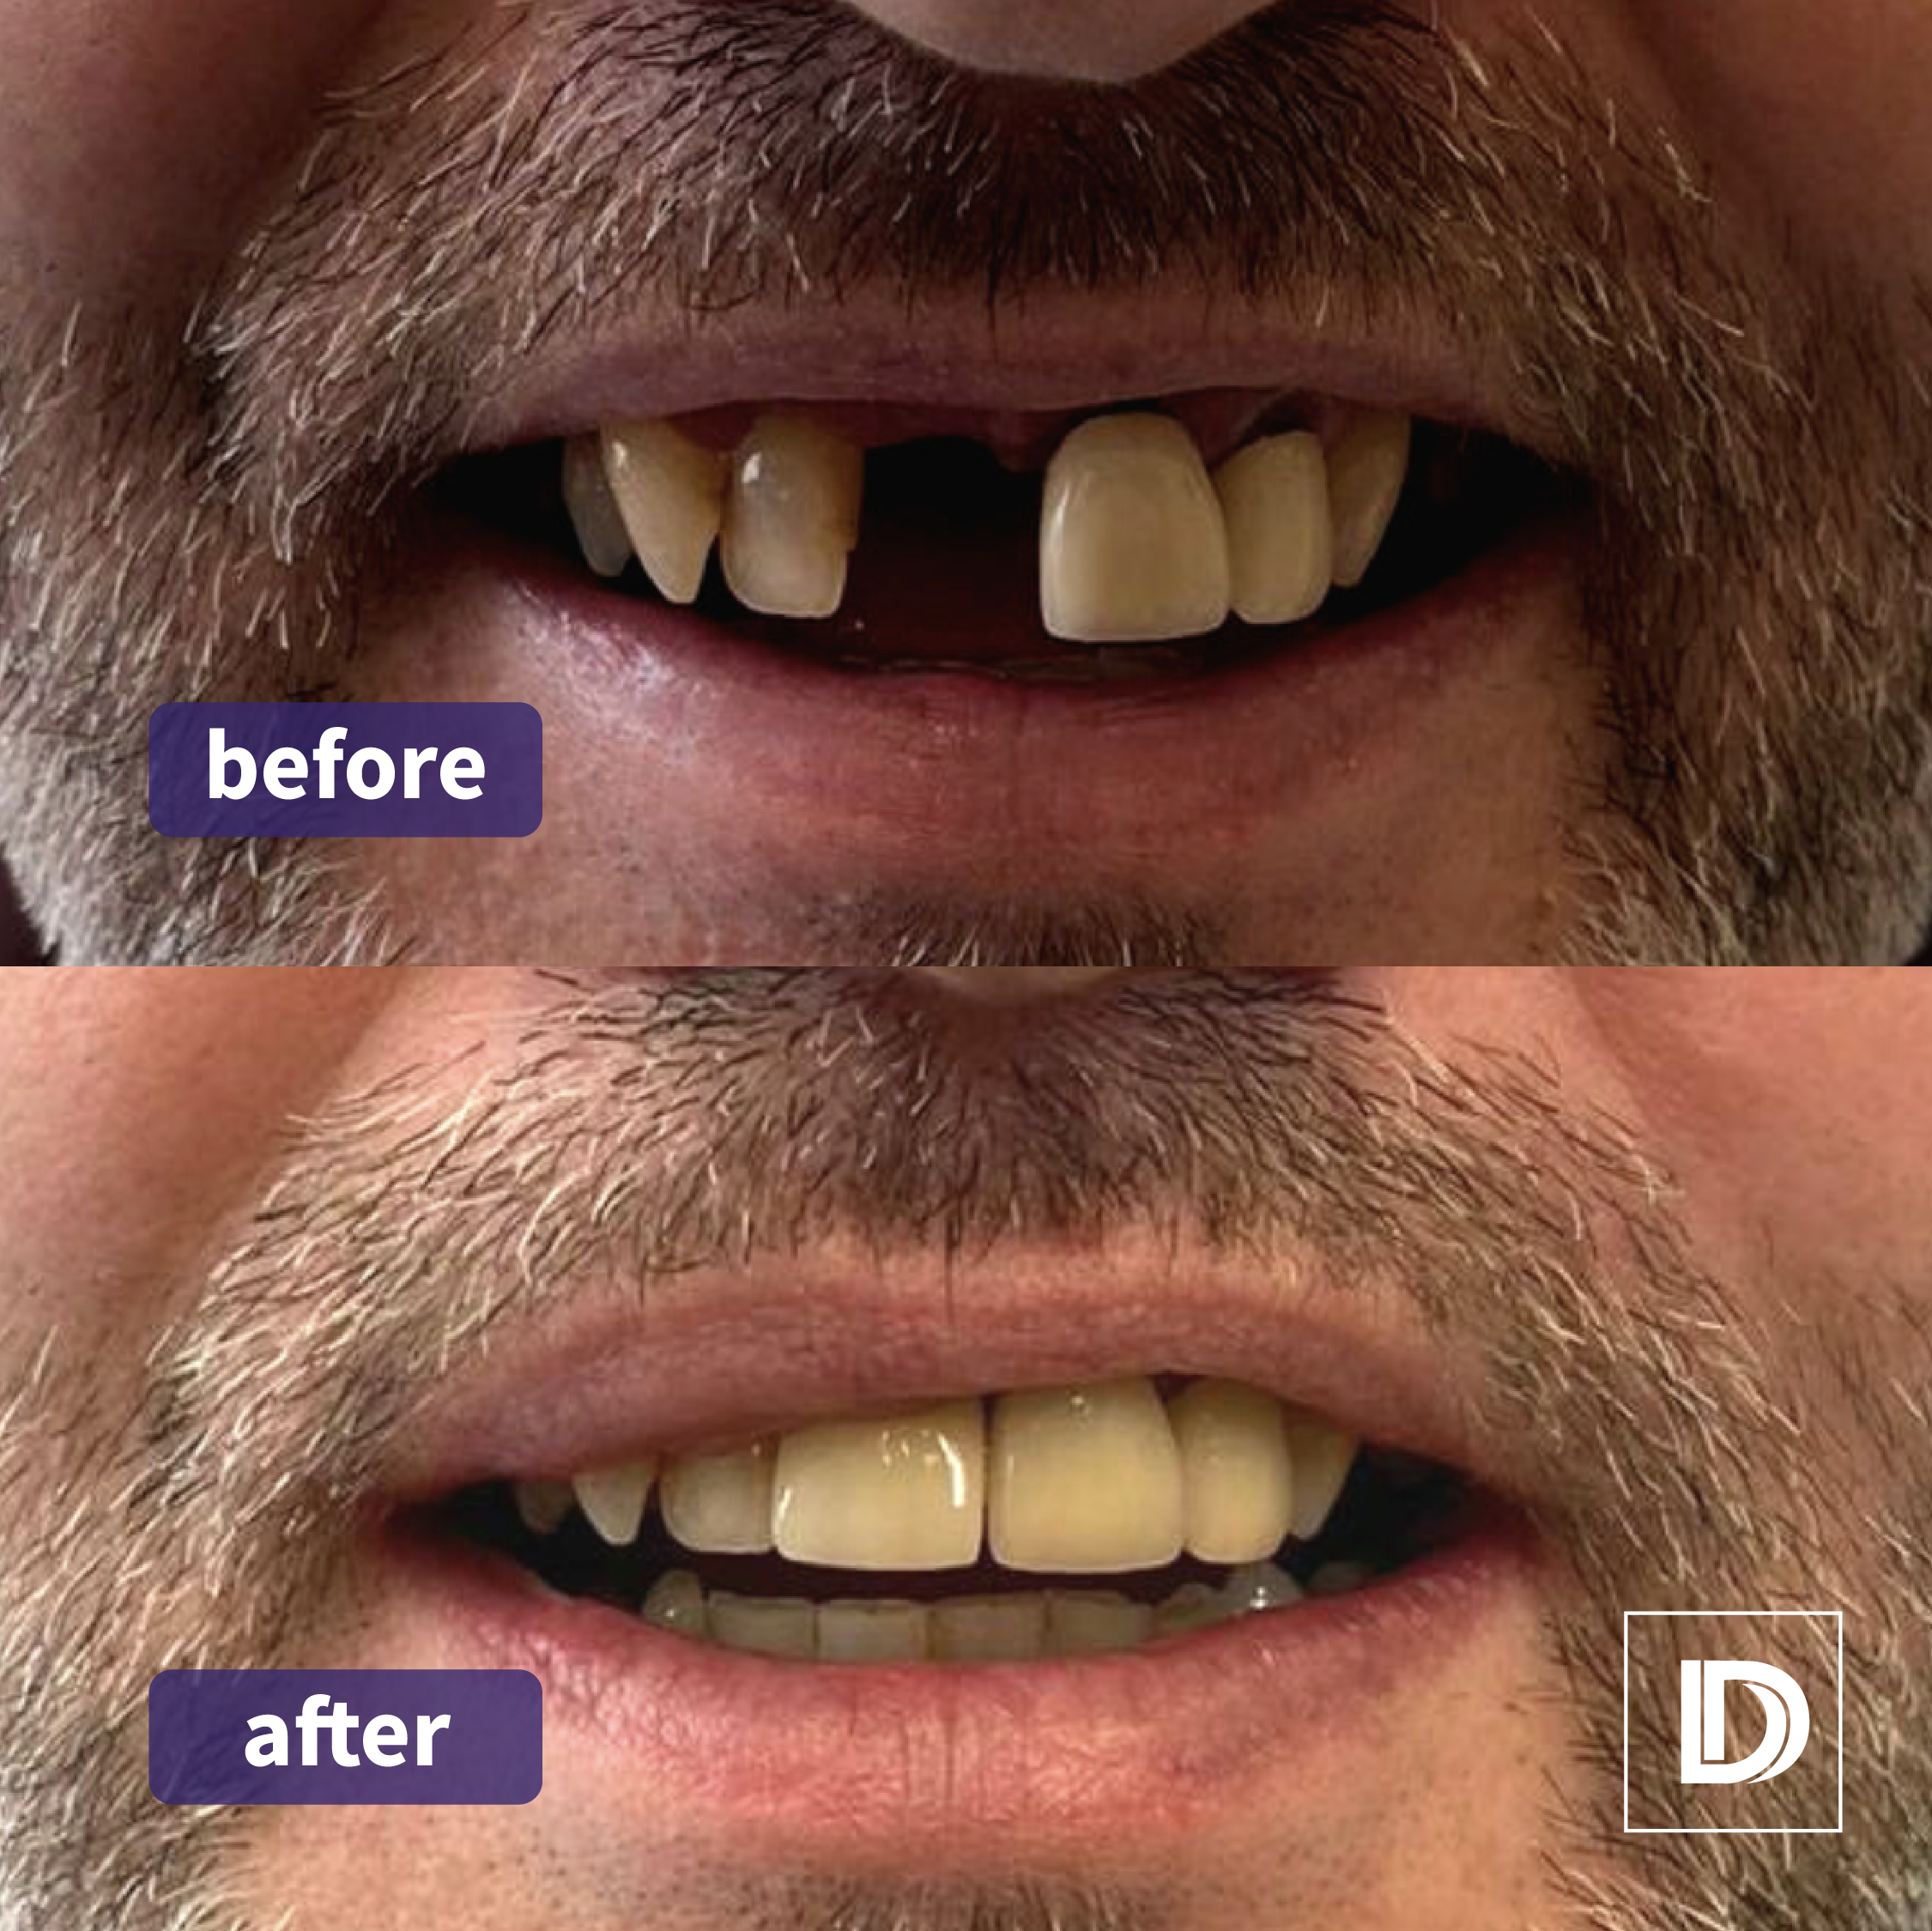 Dental Implants Missing Teeth Dentures Dentist Implant Darwen Lancashire Blackburn Bolton Burnley